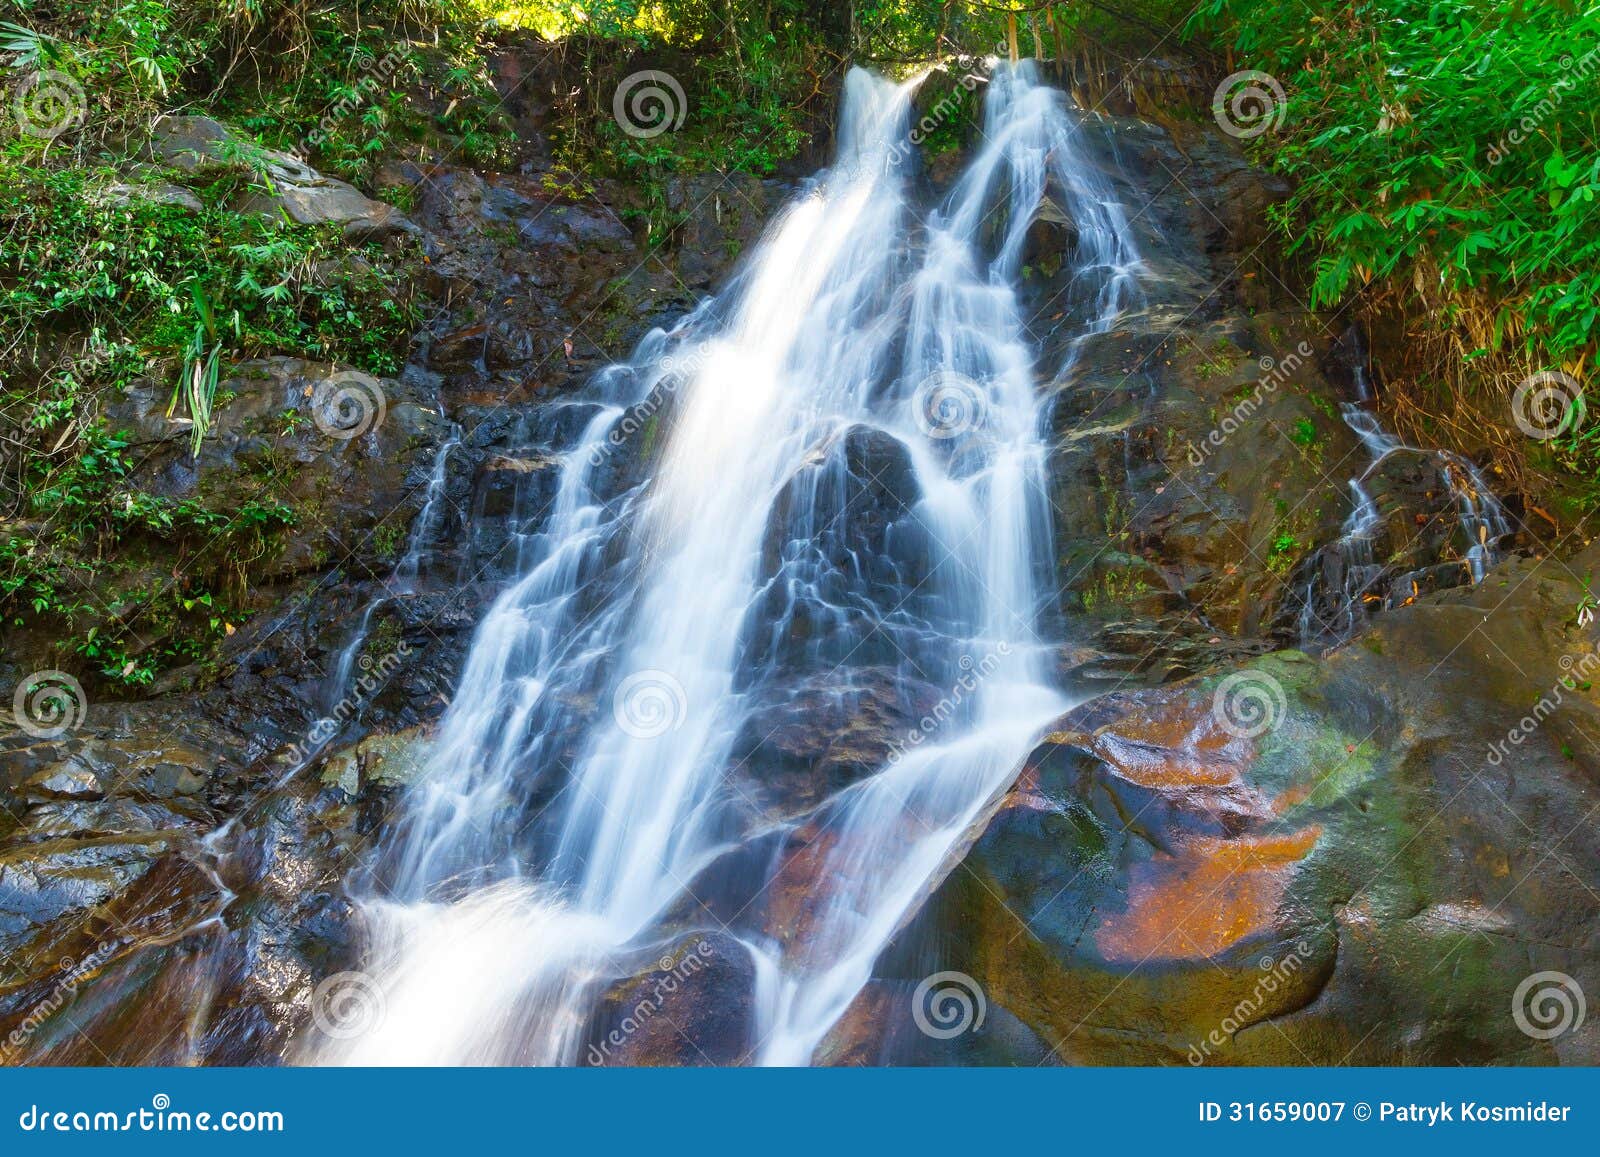 beautiful sai rung waterfall